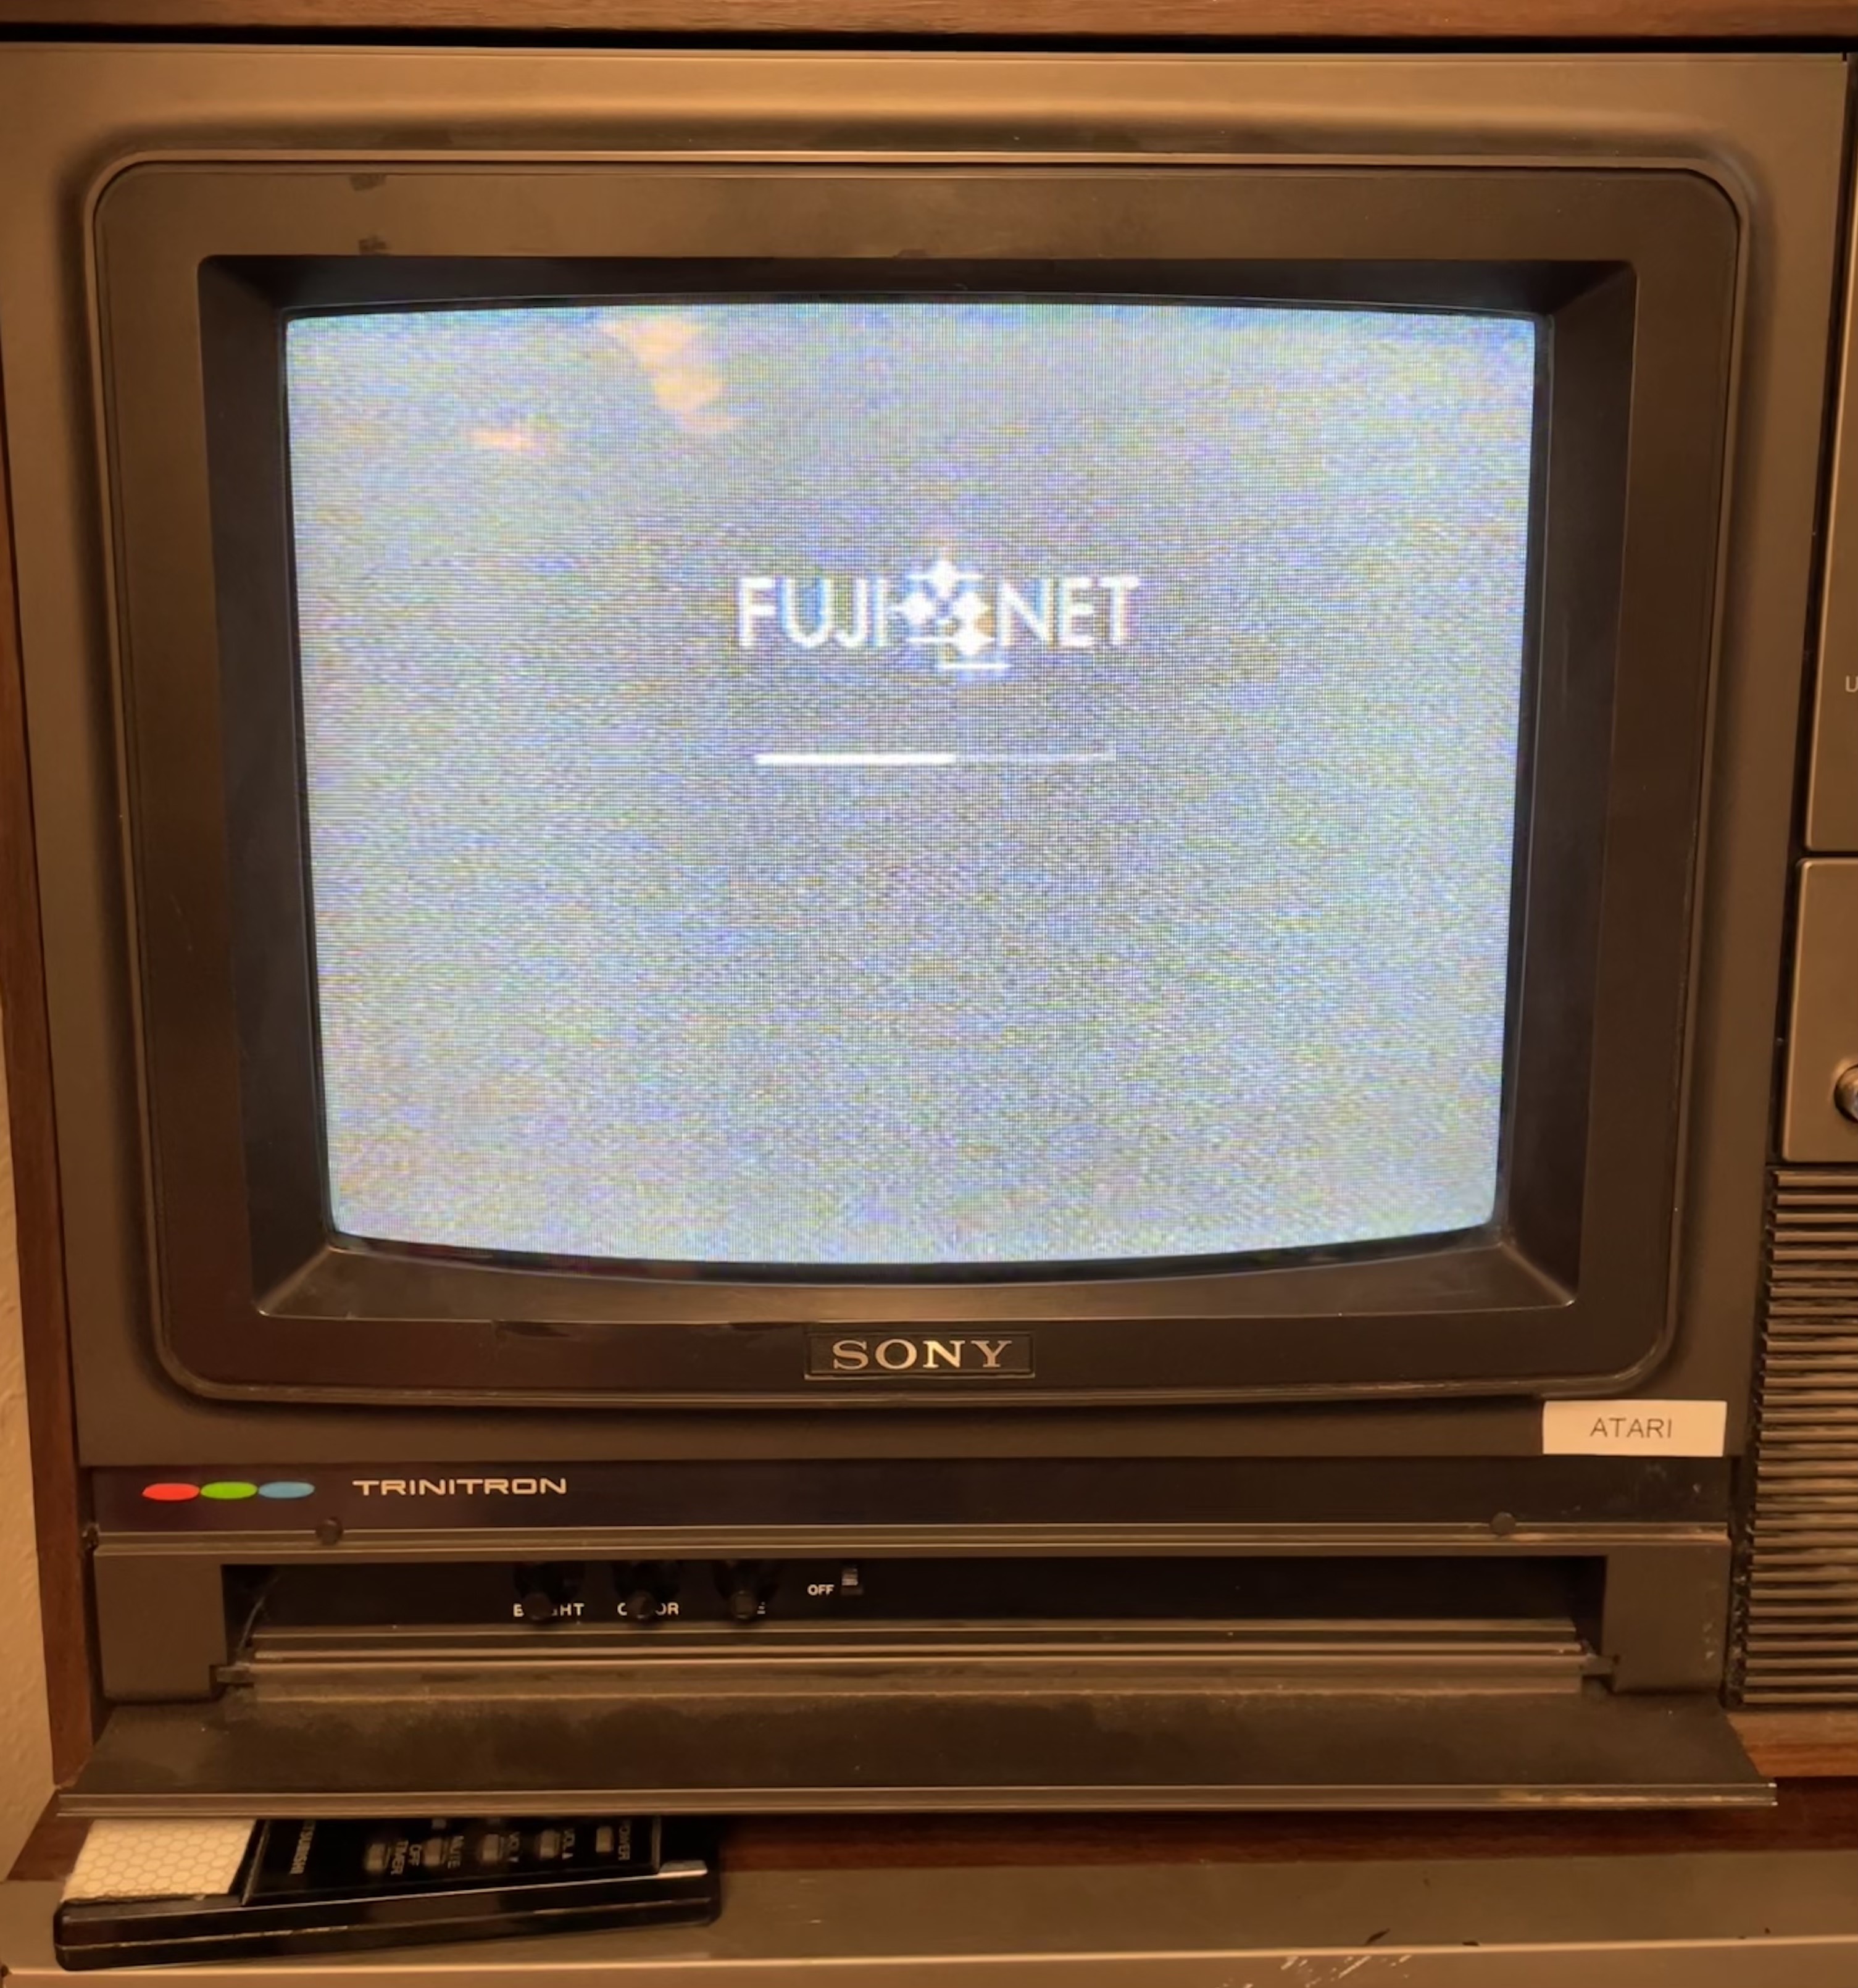 Fujinet start-up screen